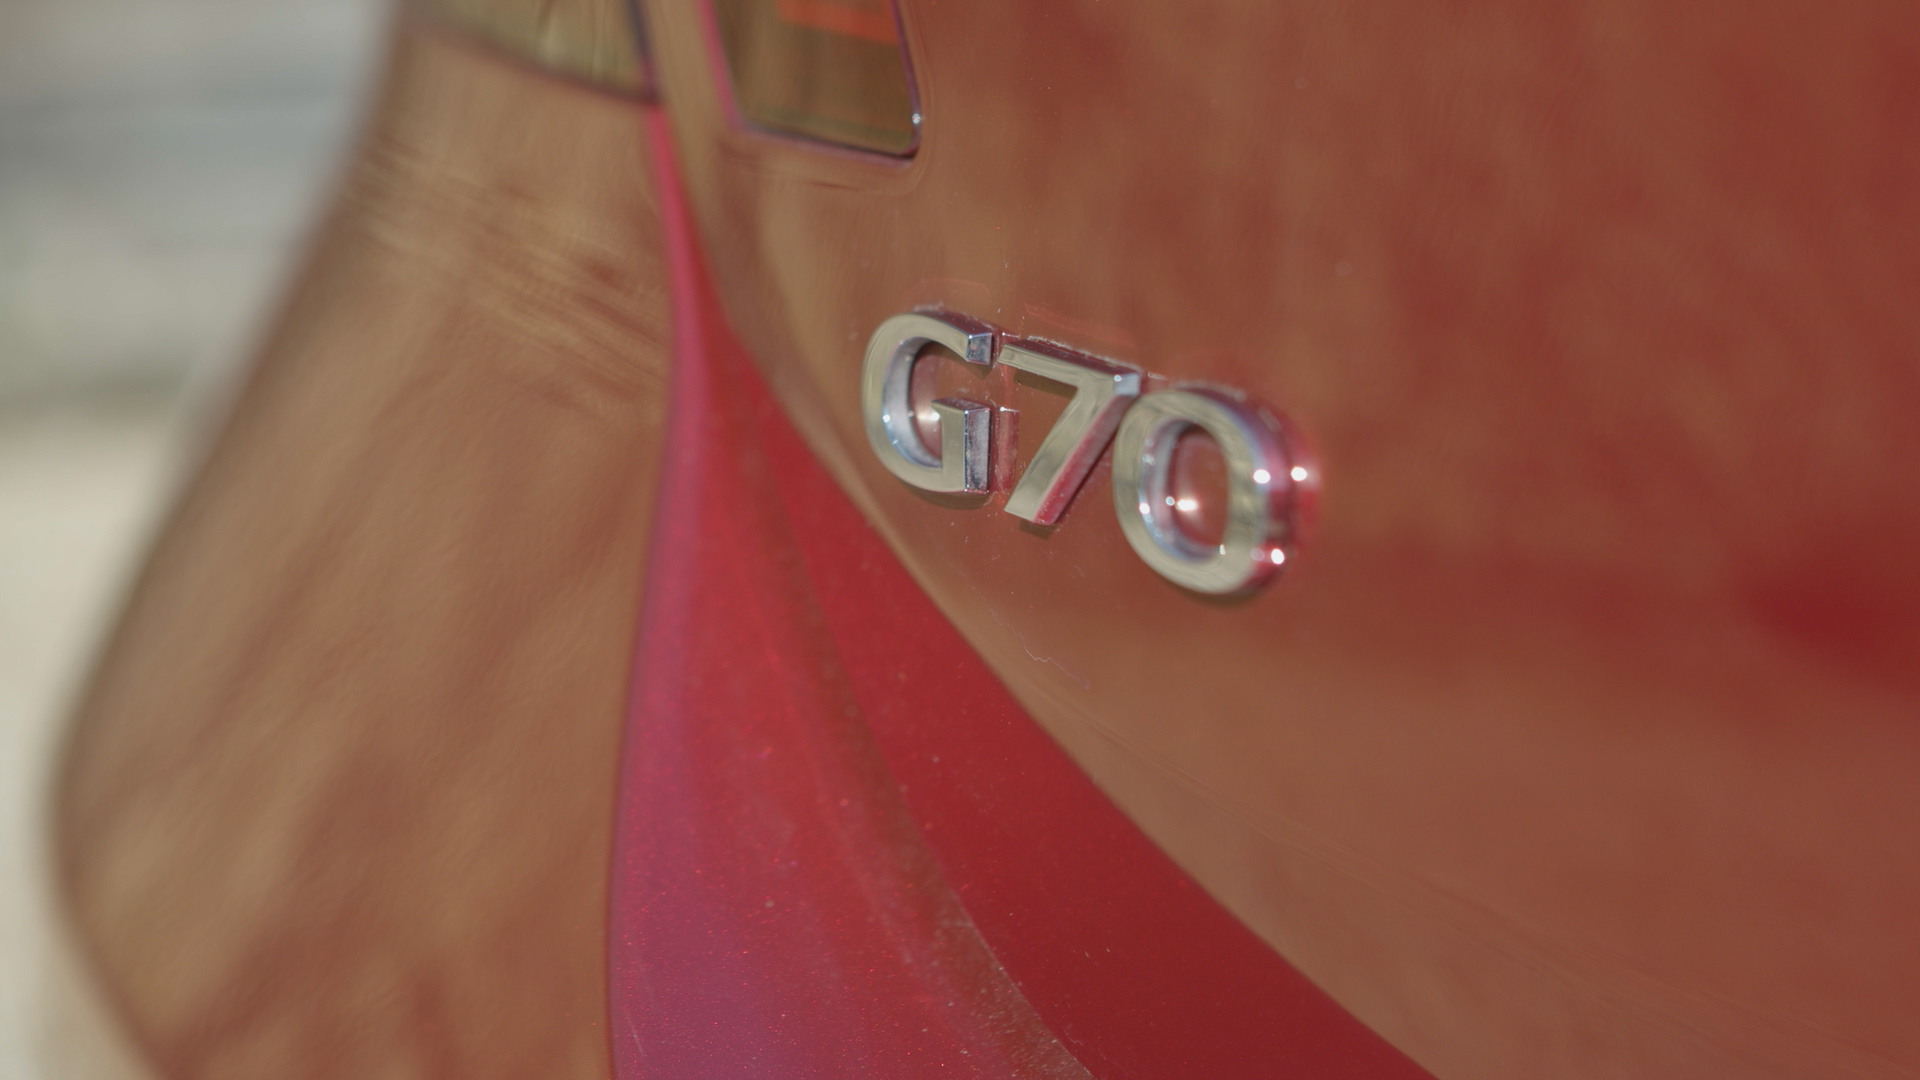 GENESIS G70 SHOOTING BRAKE 2.0T [245] Sport 5dr Auto [Innovation Pack]